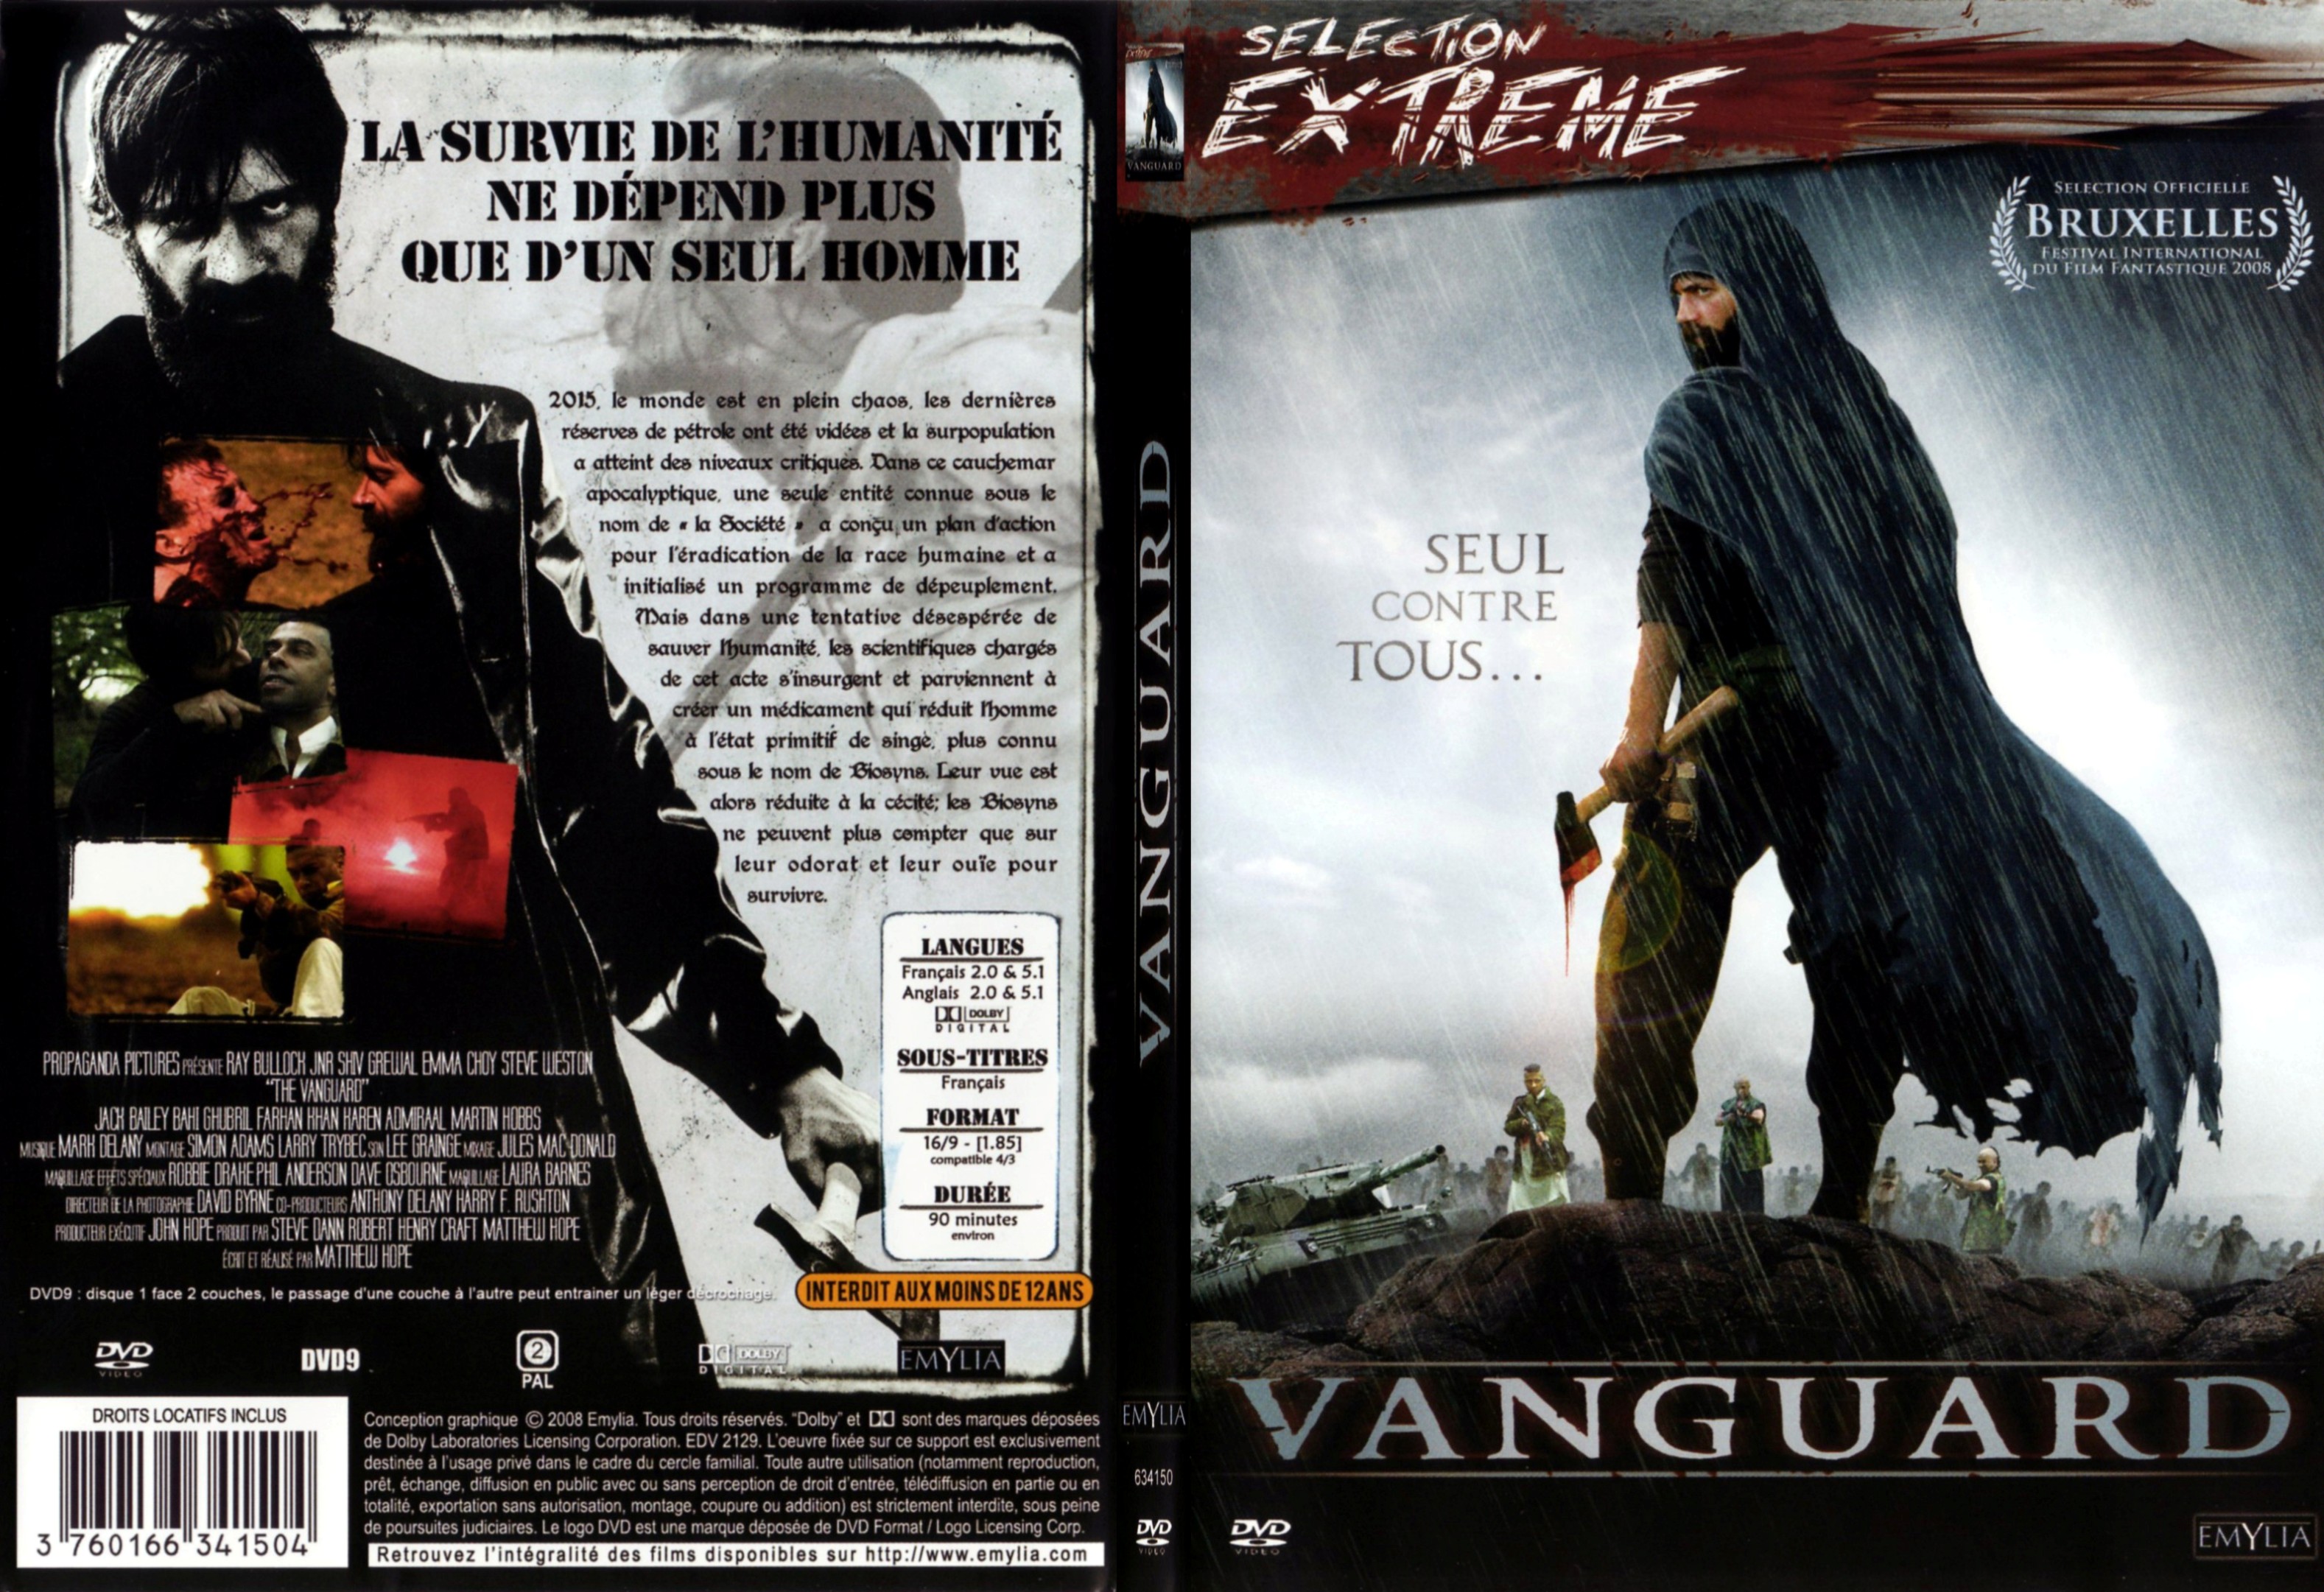 Jaquette DVD Vanguard - SLIM